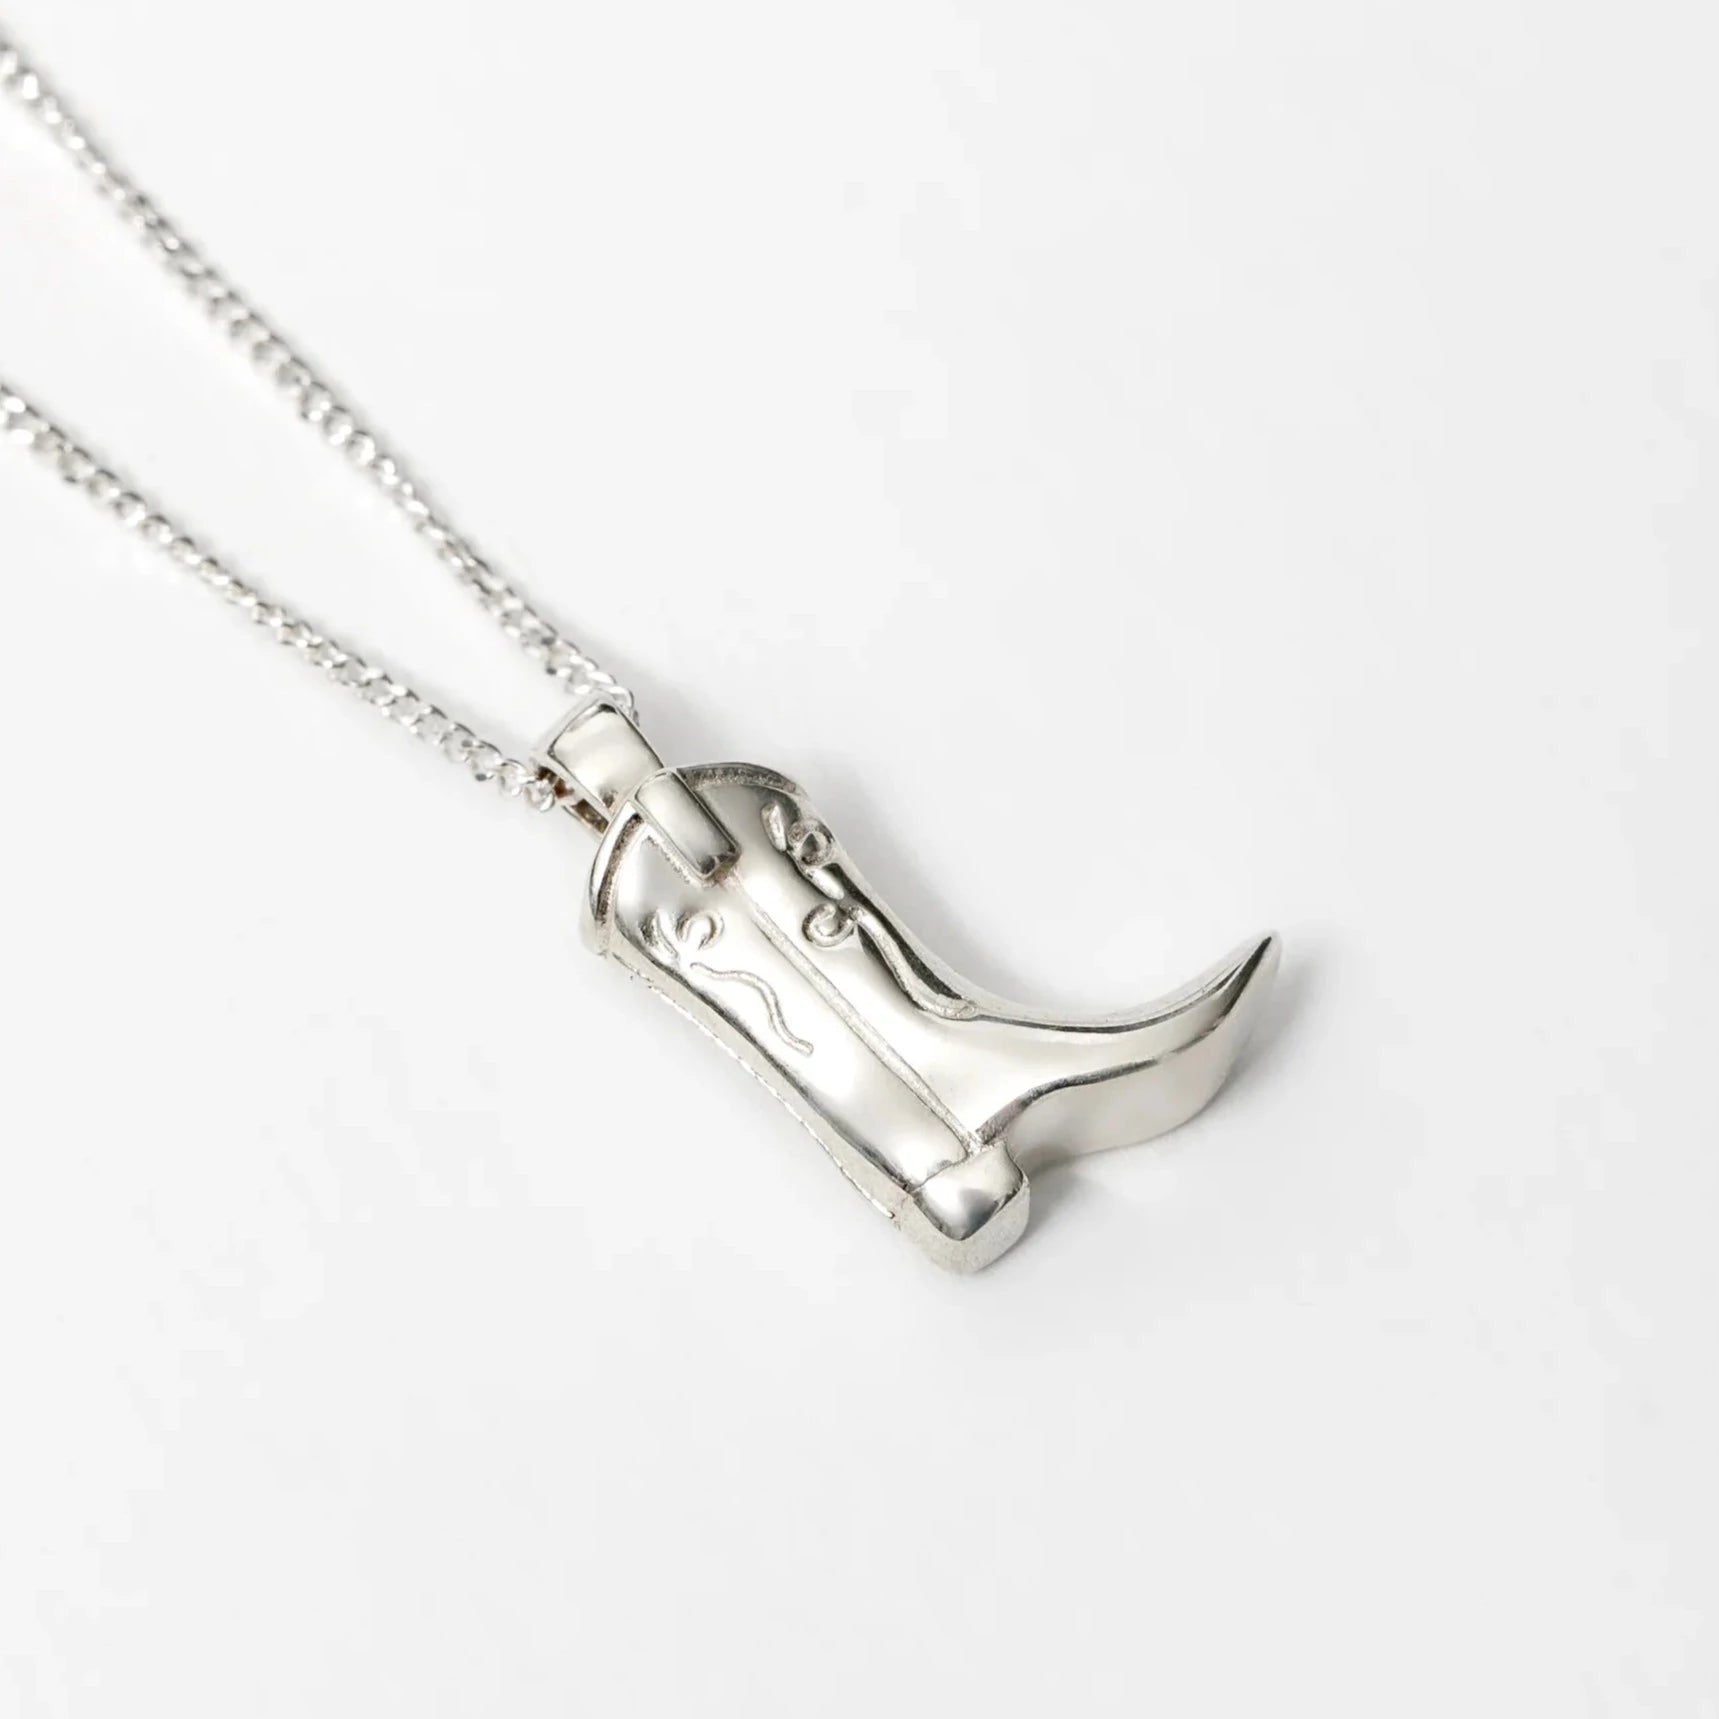 Cowboy Charm Necklace: Silver